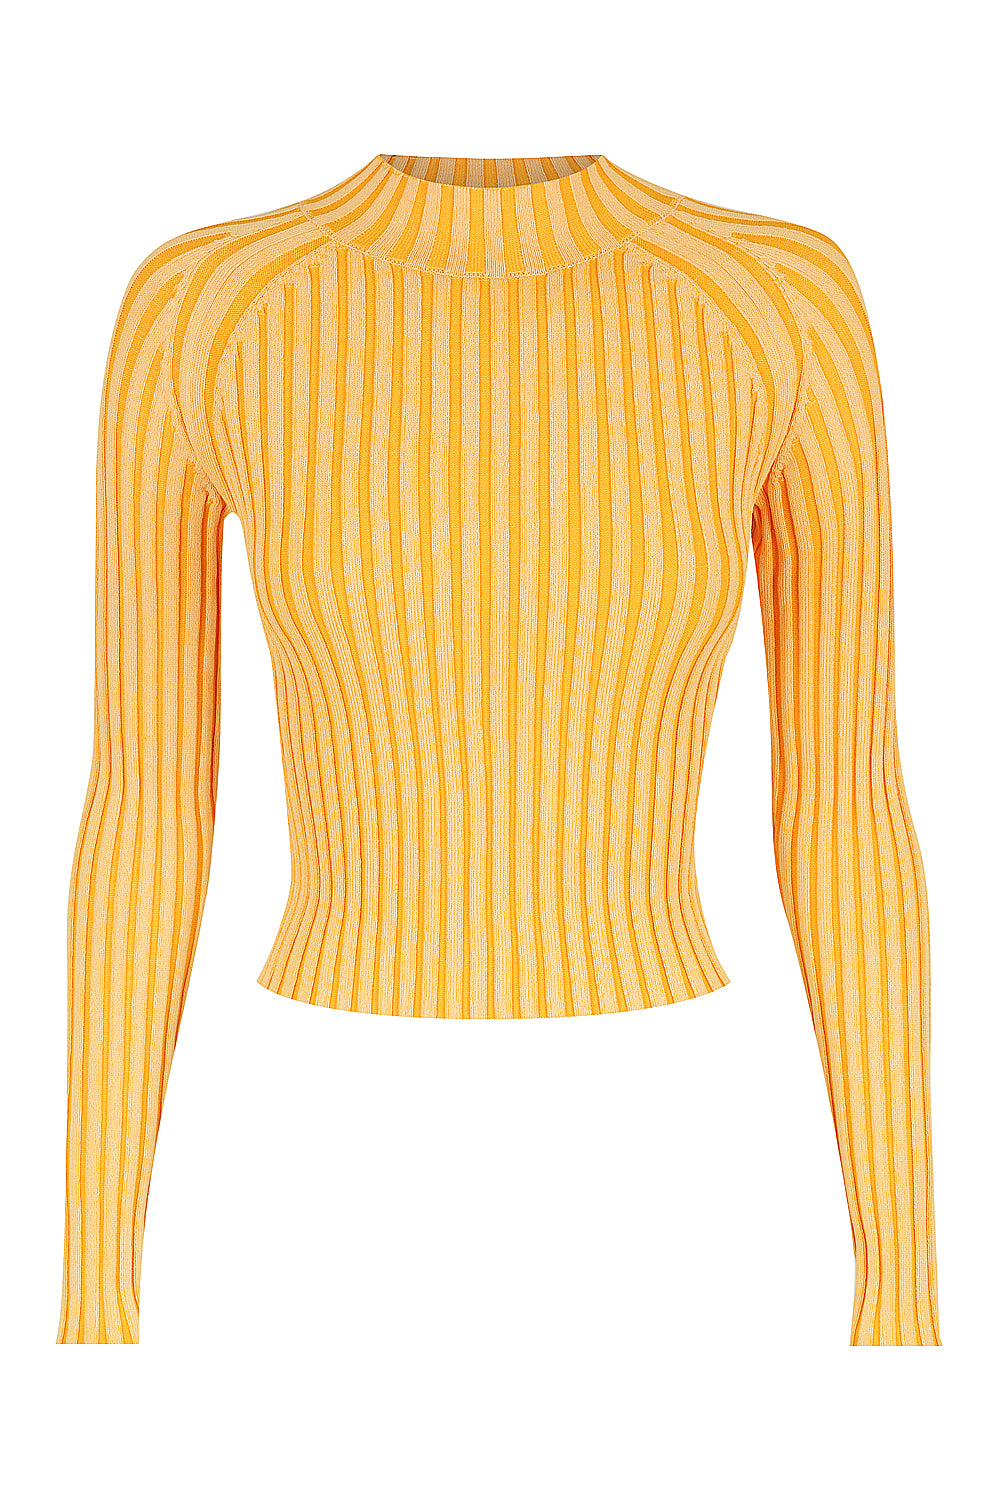 Women’s Yellow / Orange The All Sorts Two-Tone Knit Top - Orange Crush Large St Cloud Label